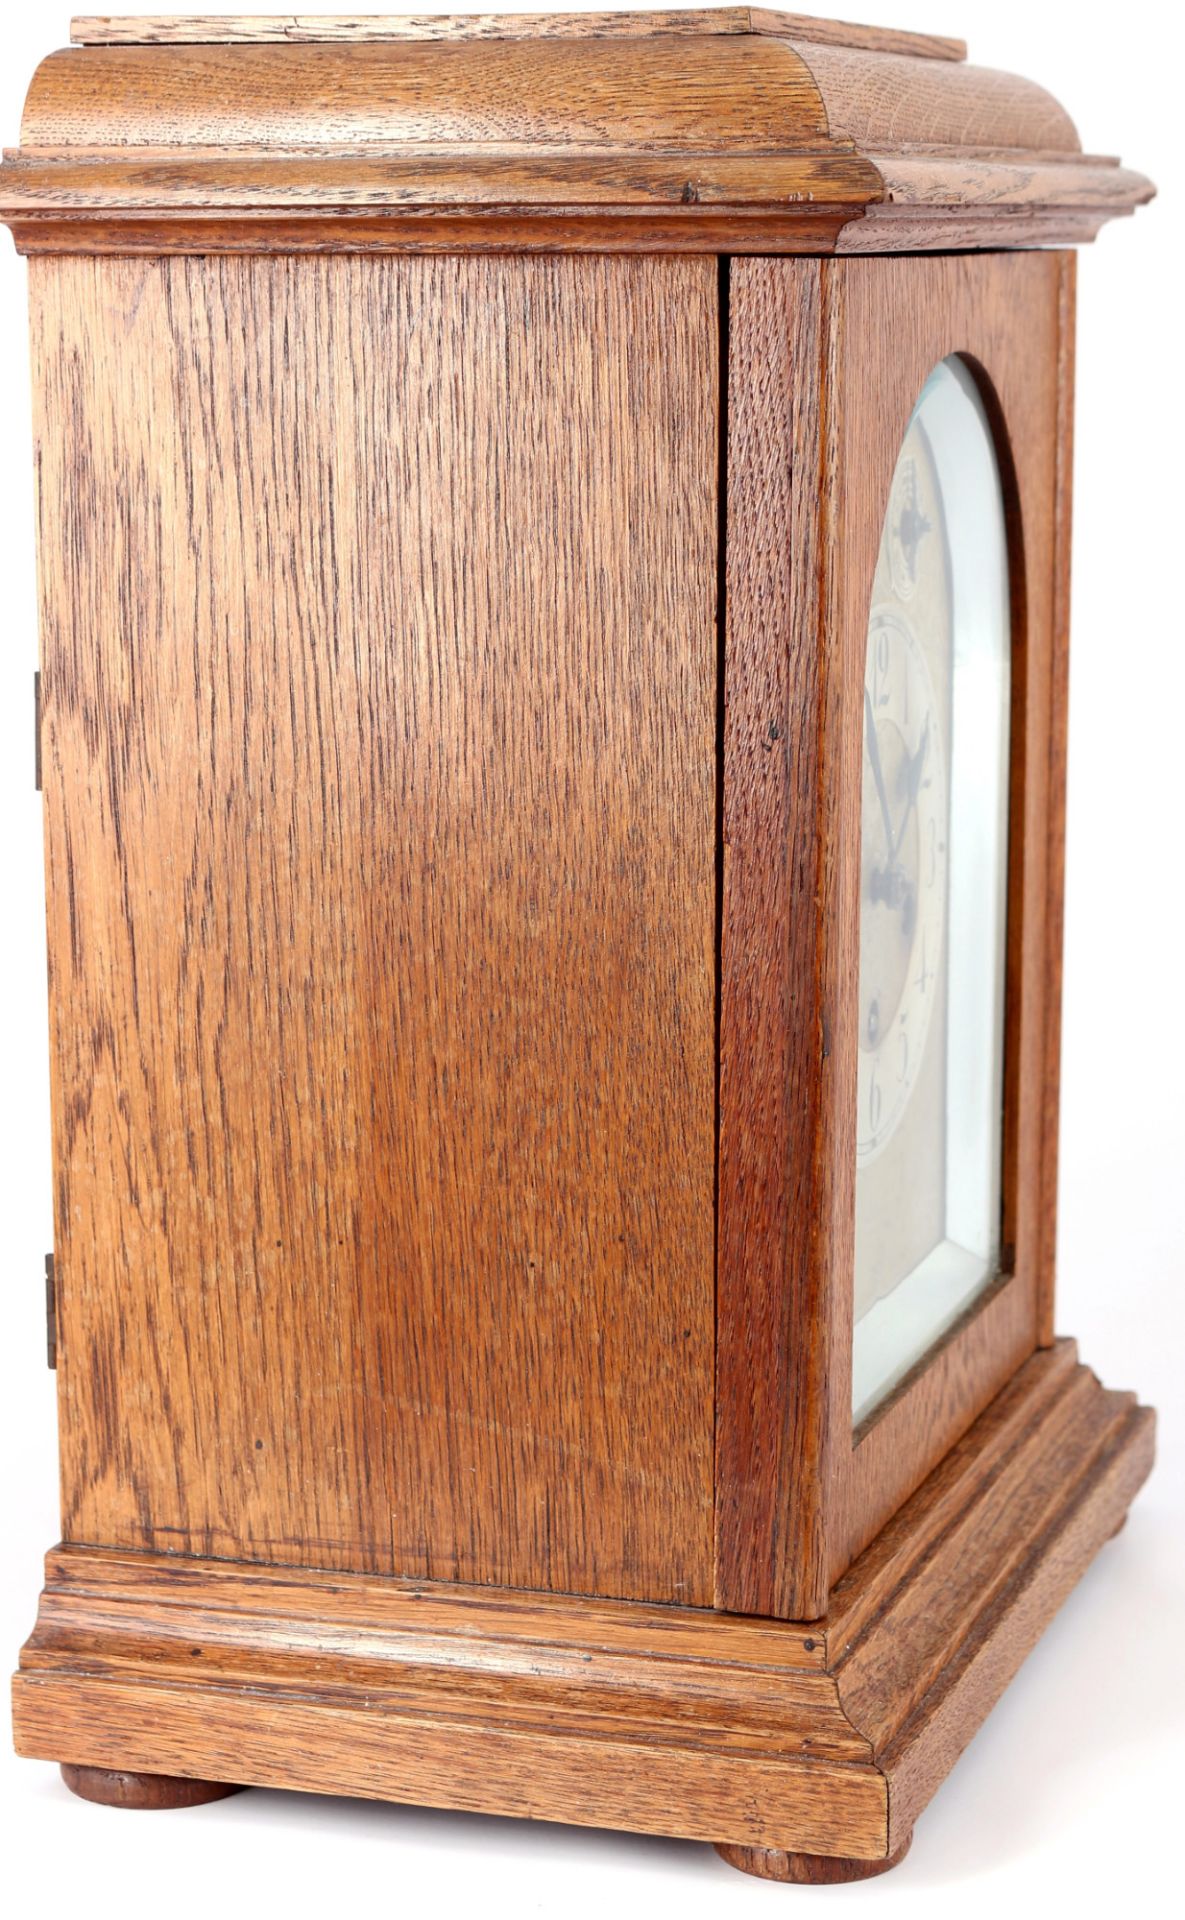 Westminster bracket clock ca. 1900, Junghans, Tischuhr um 1900, Stockuhr, - Image 5 of 7